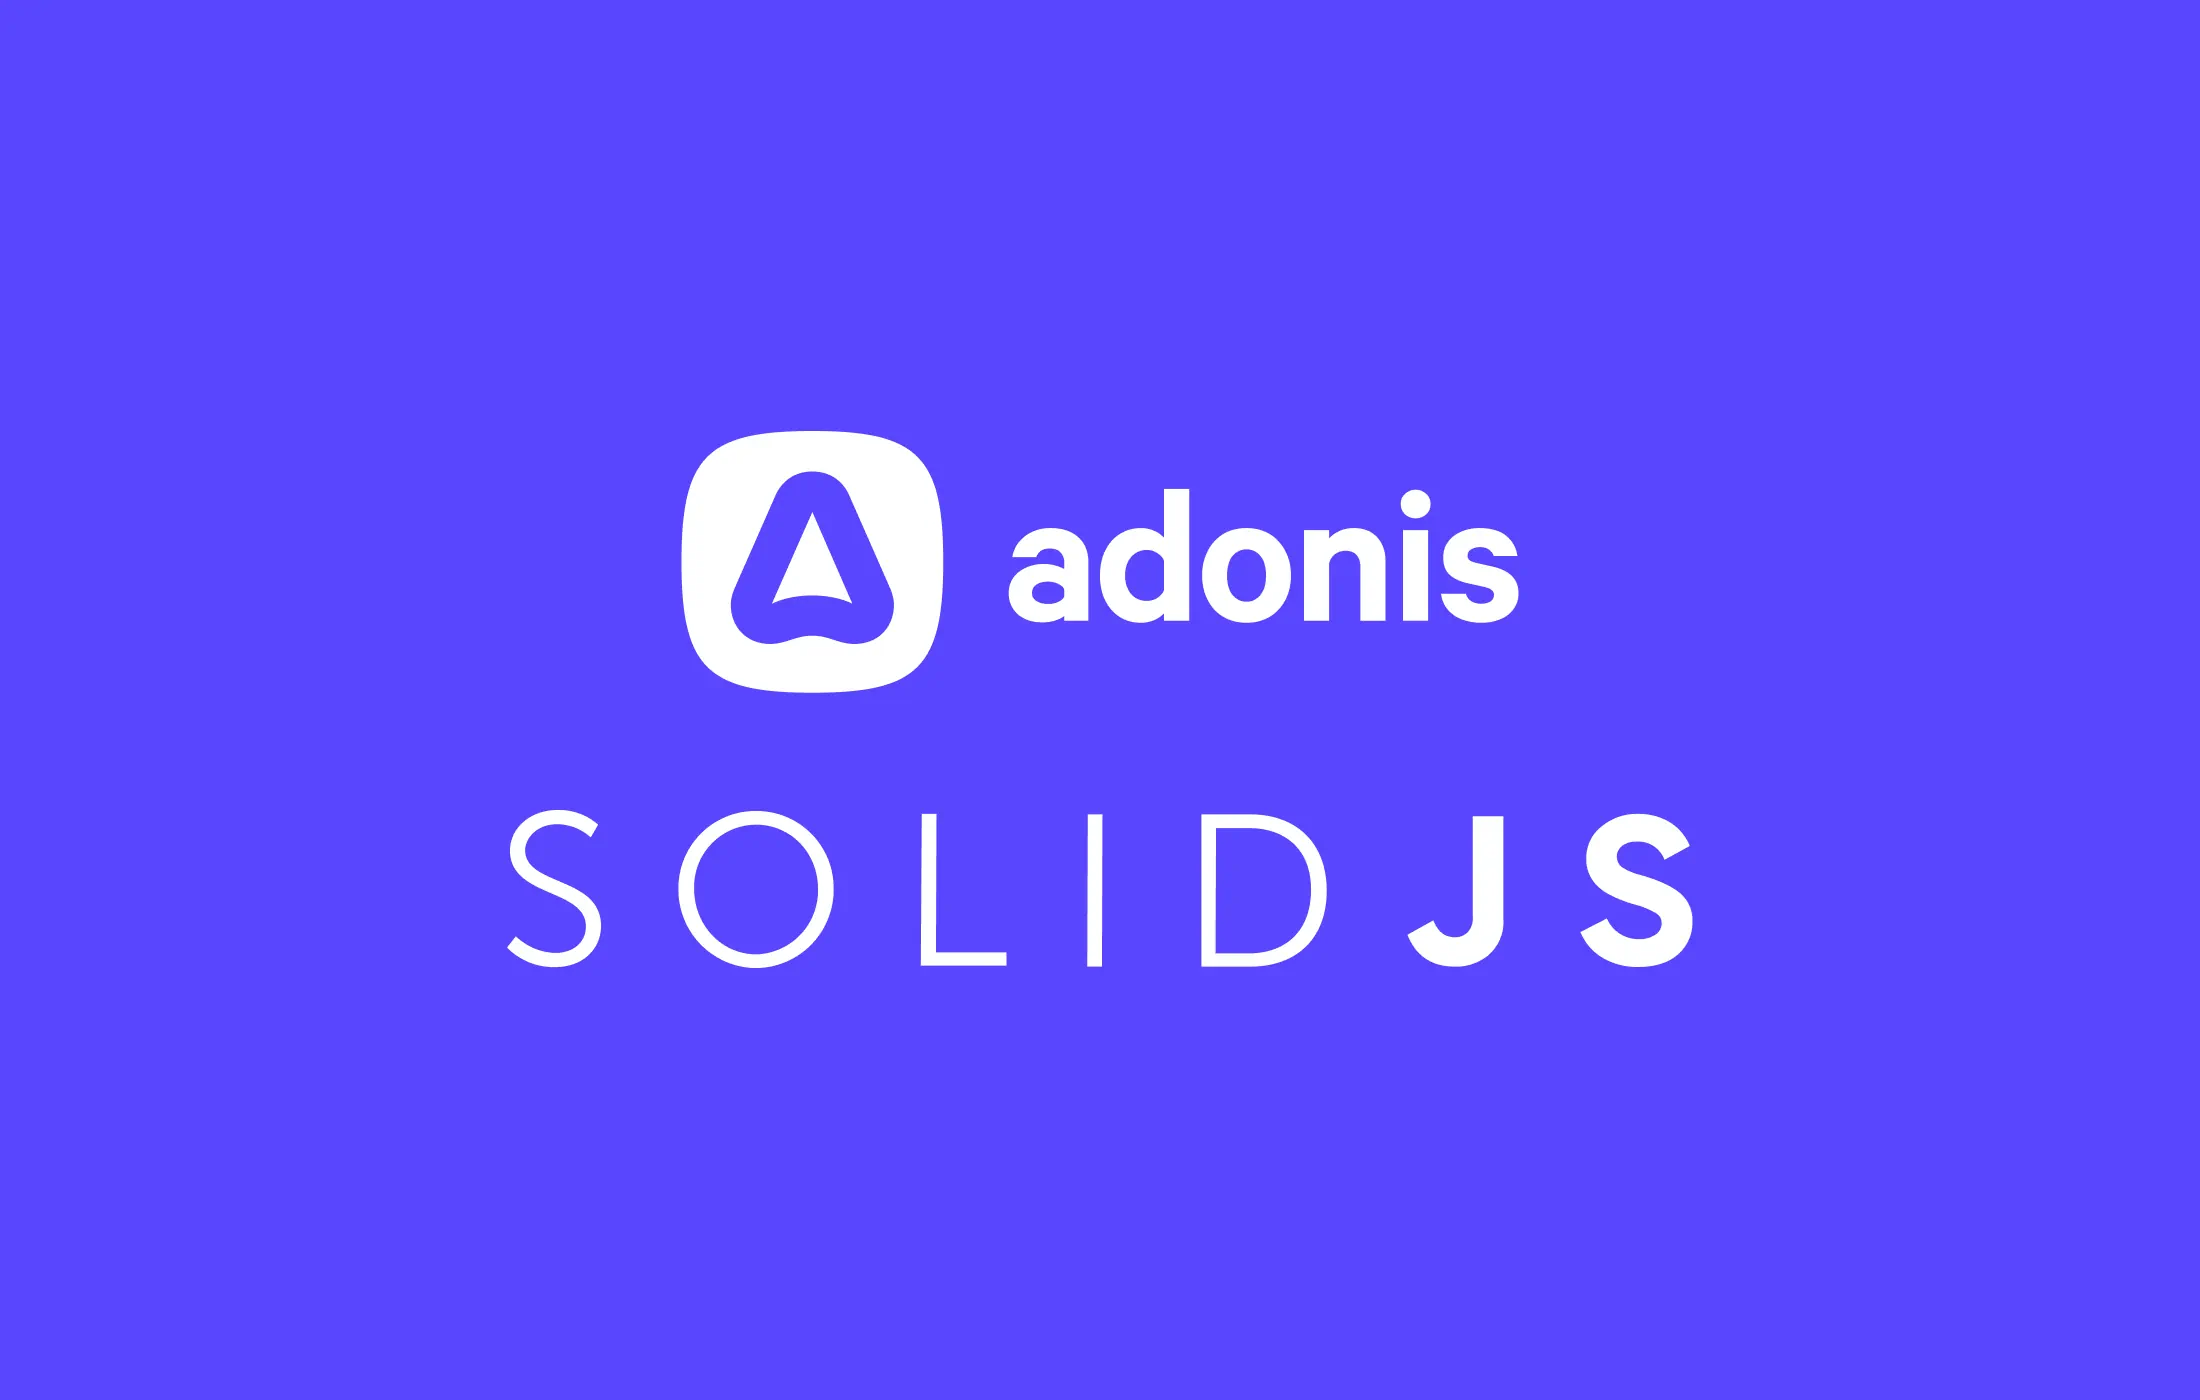 AdonisJs and SolidJS